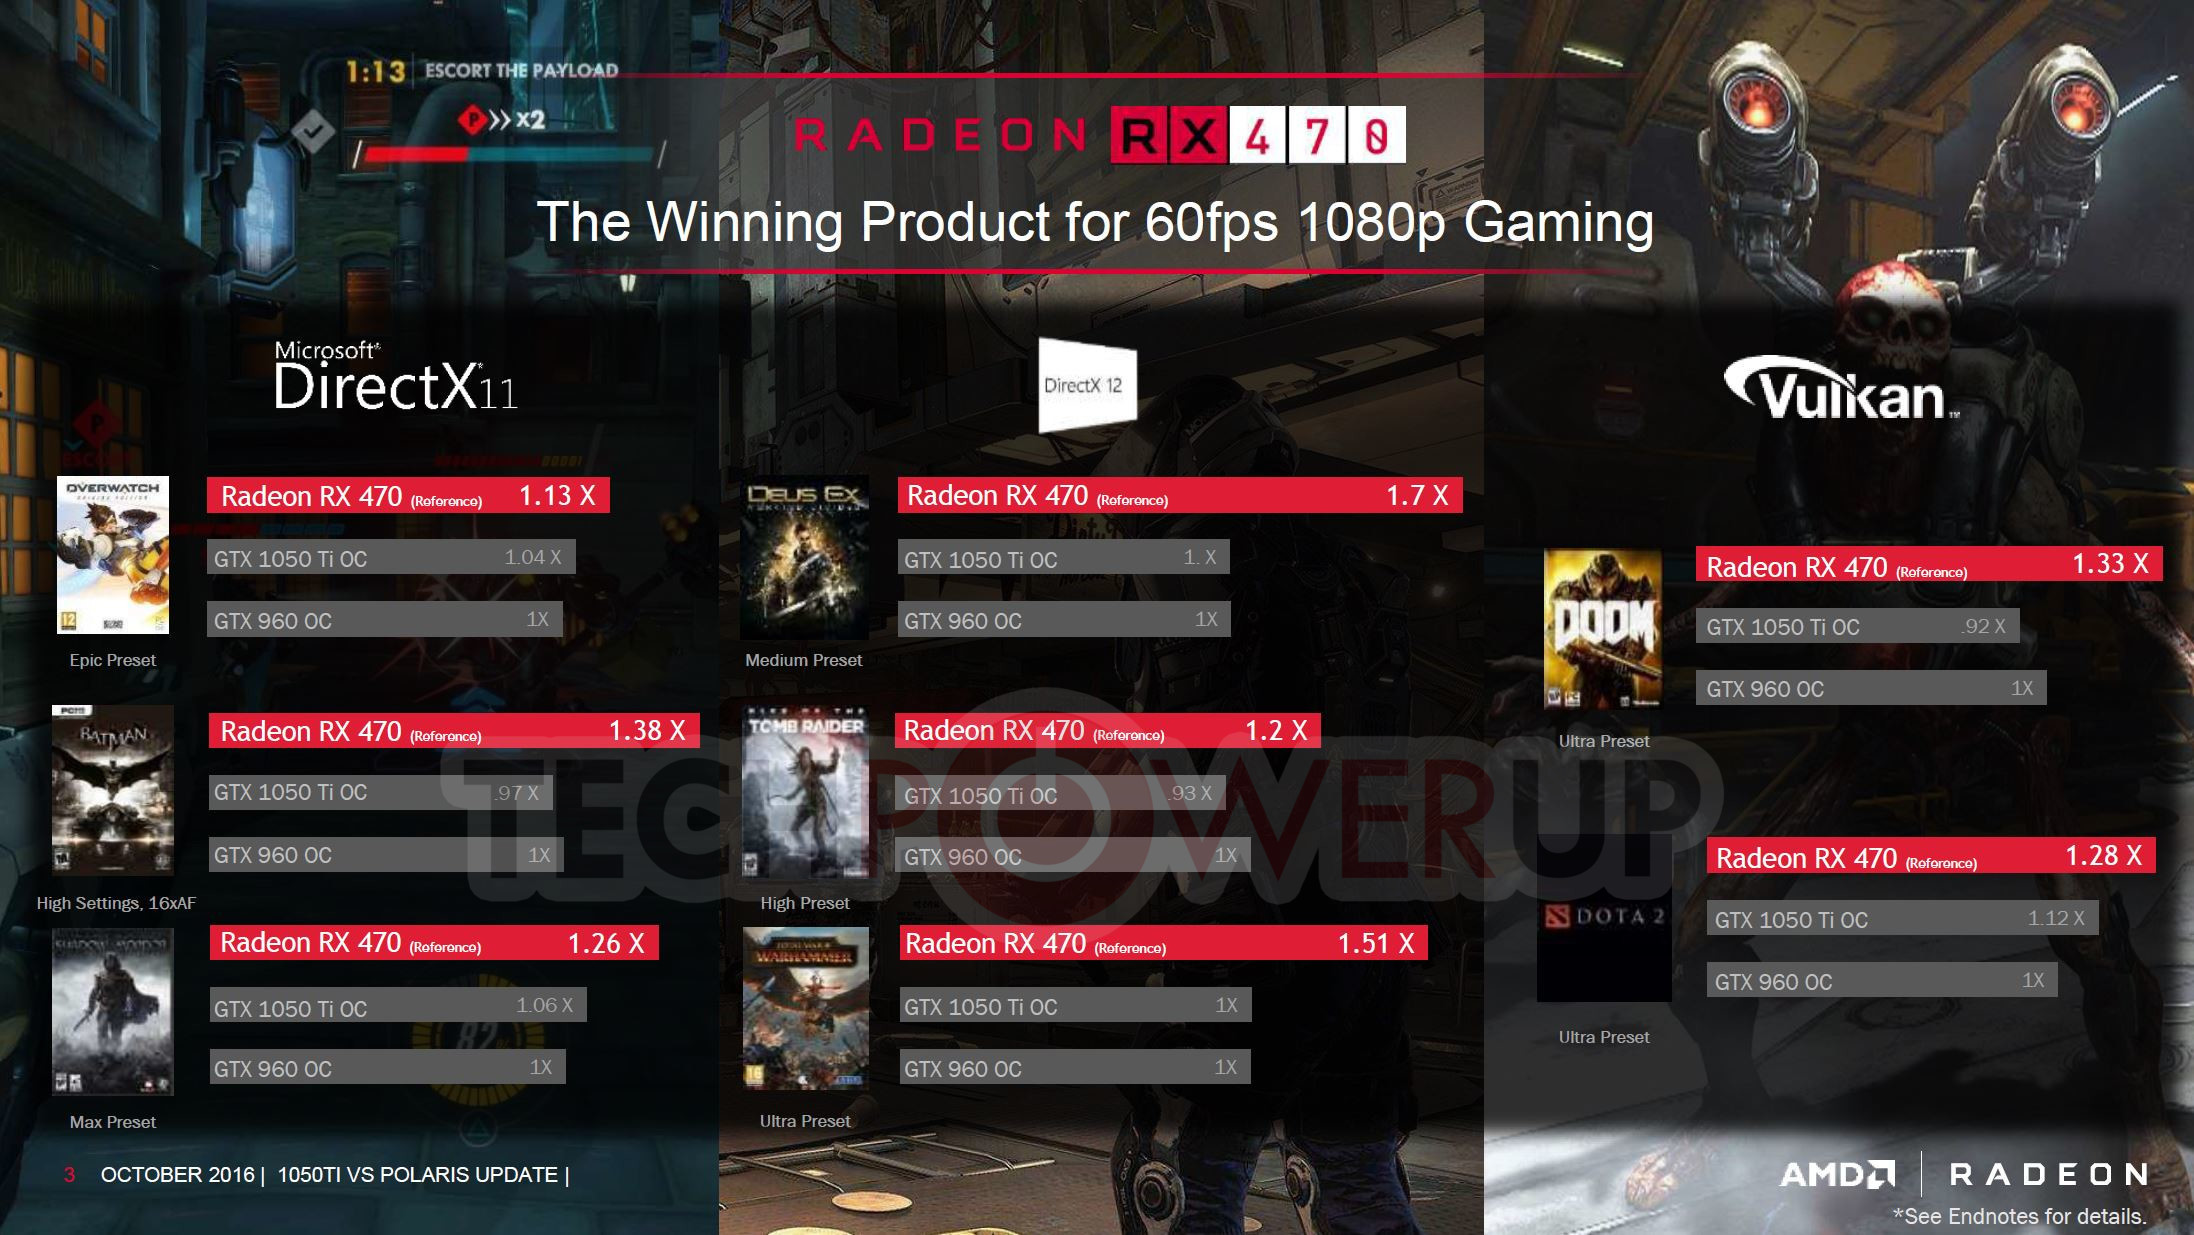 AMD: Radeon RX 470 is better choice 